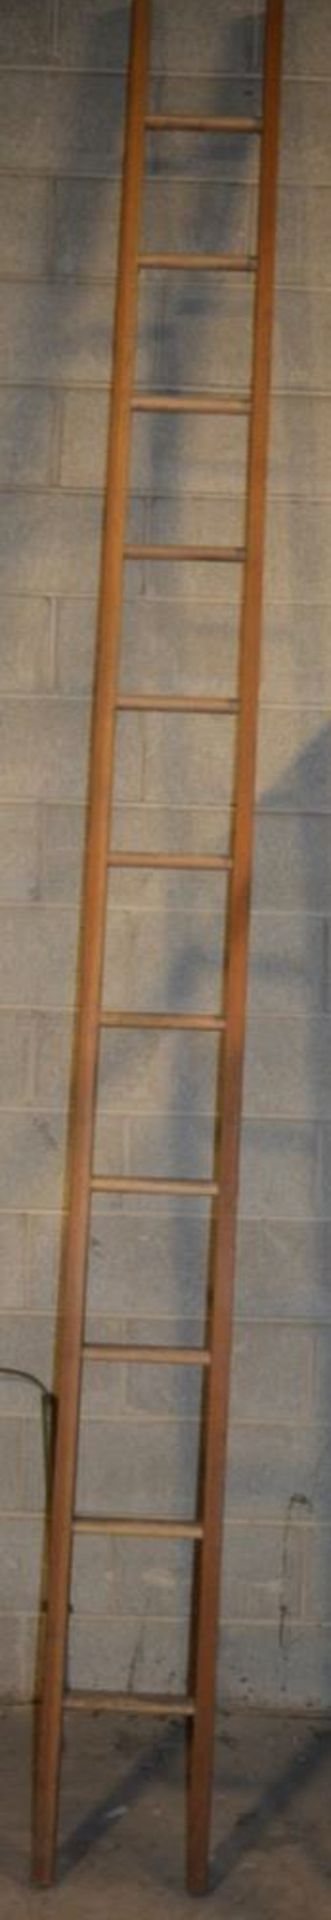 Dayton #153012 12' Wood Straight Ladder